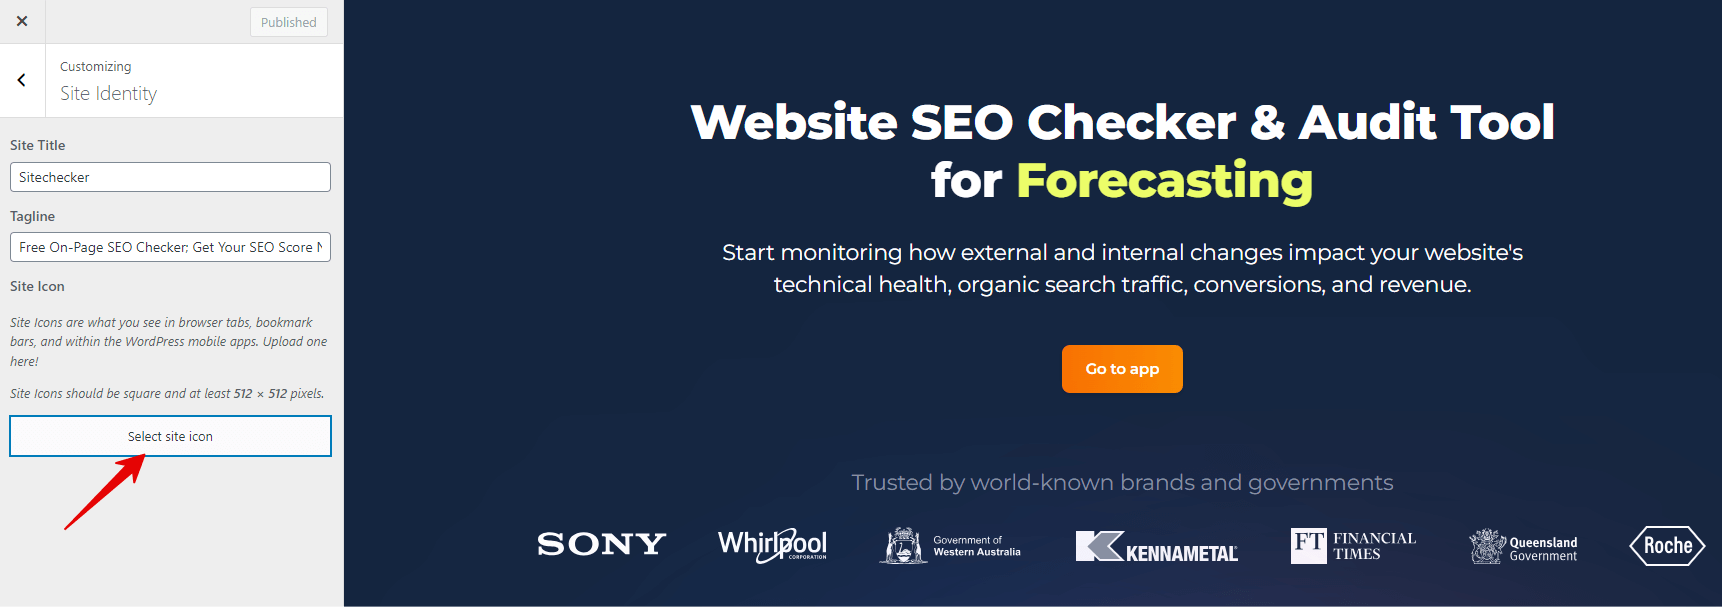 select site icon